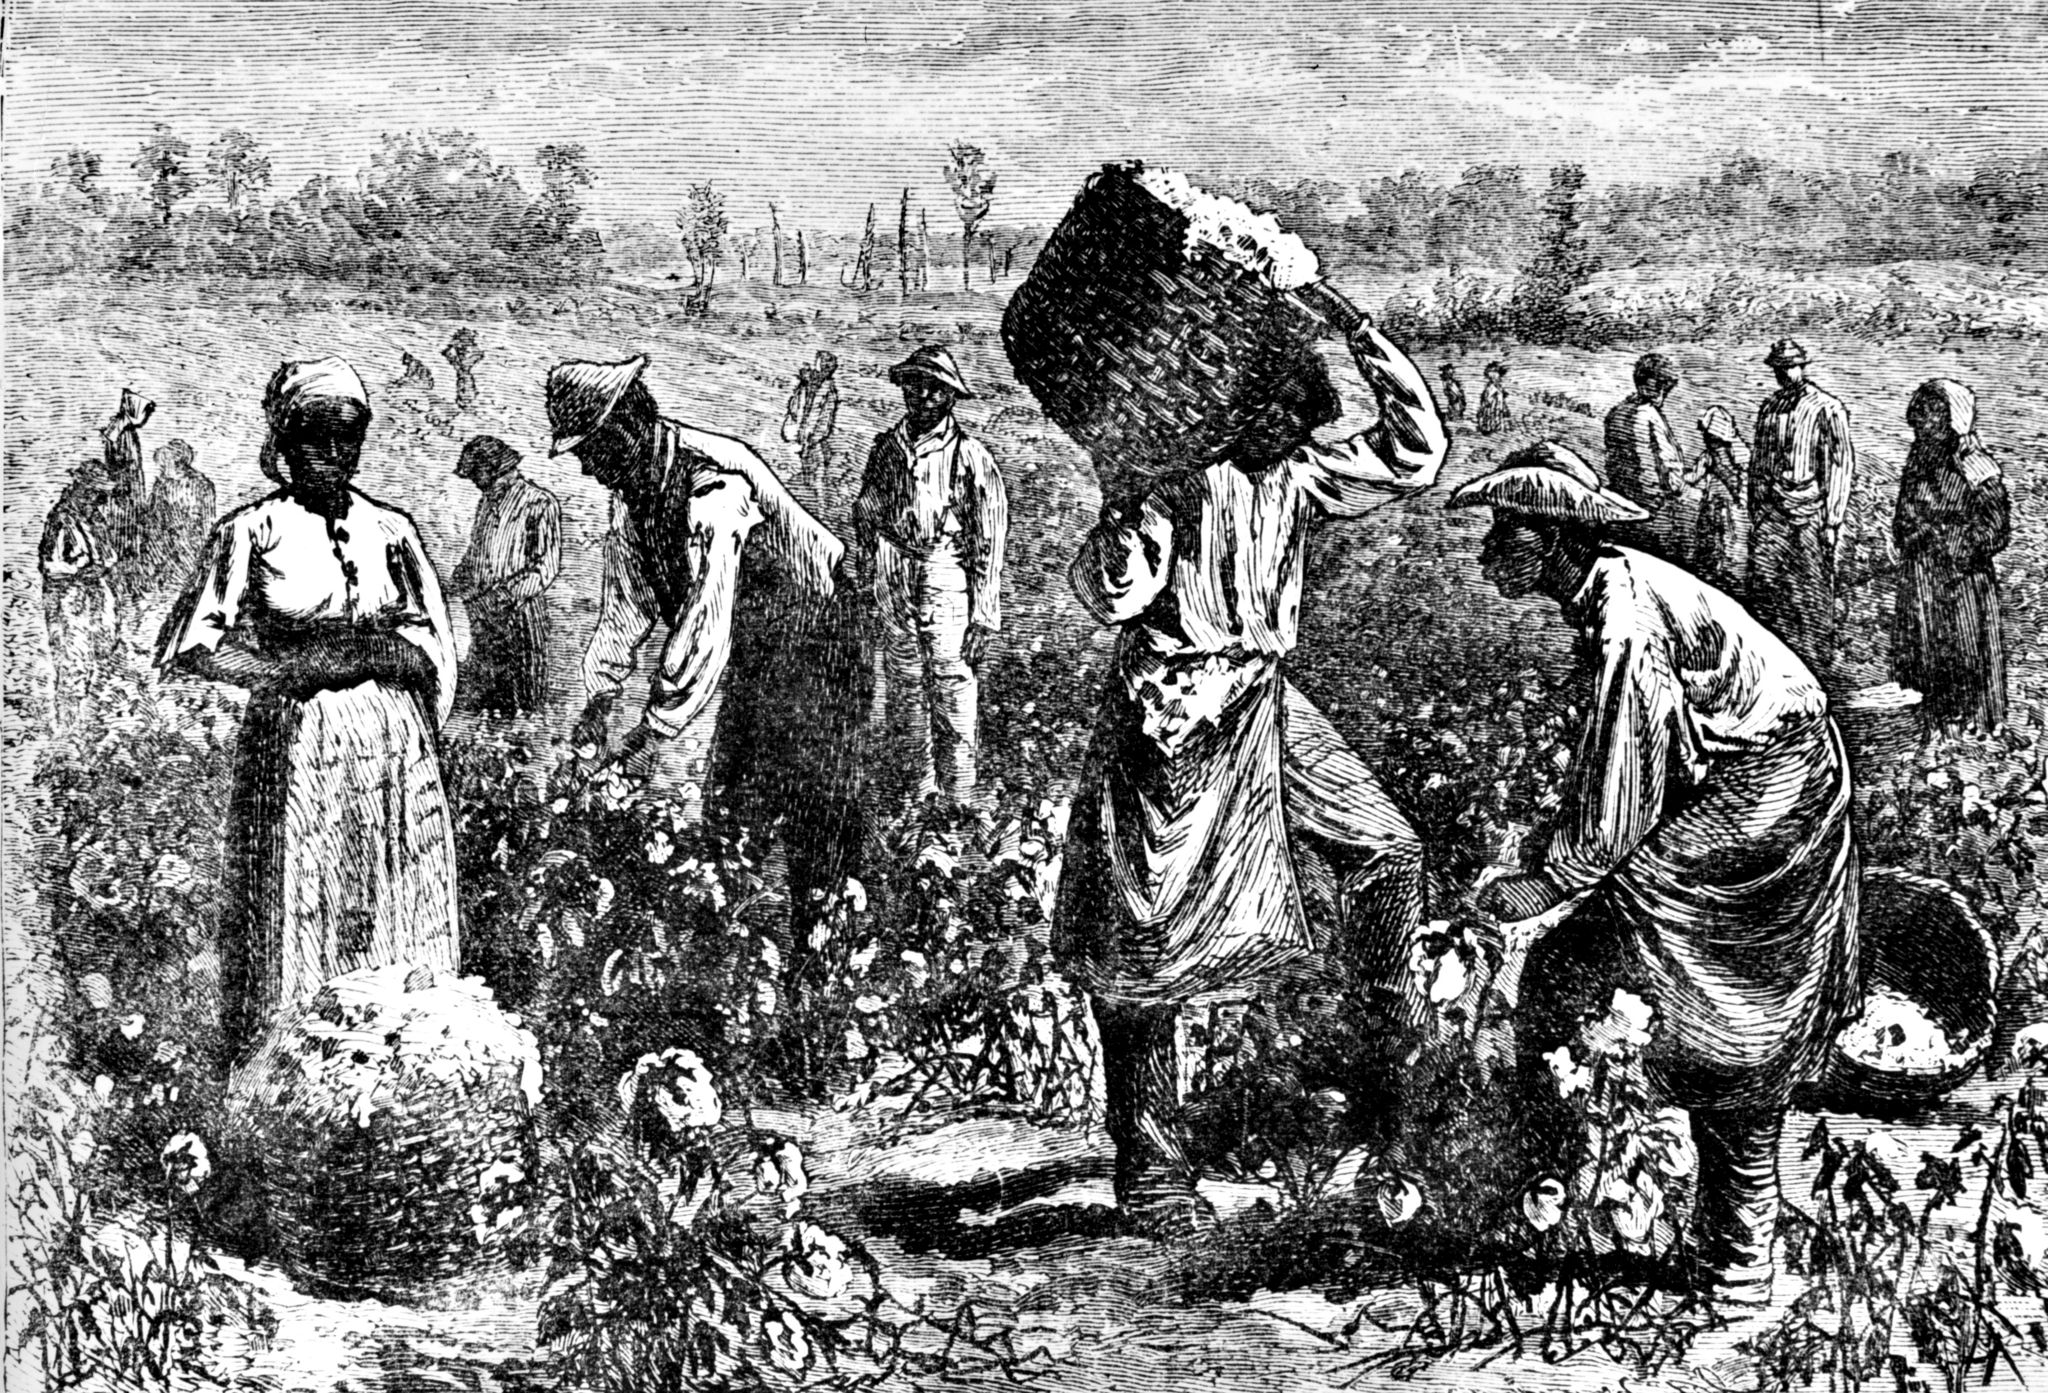 Slaves working on a plantation